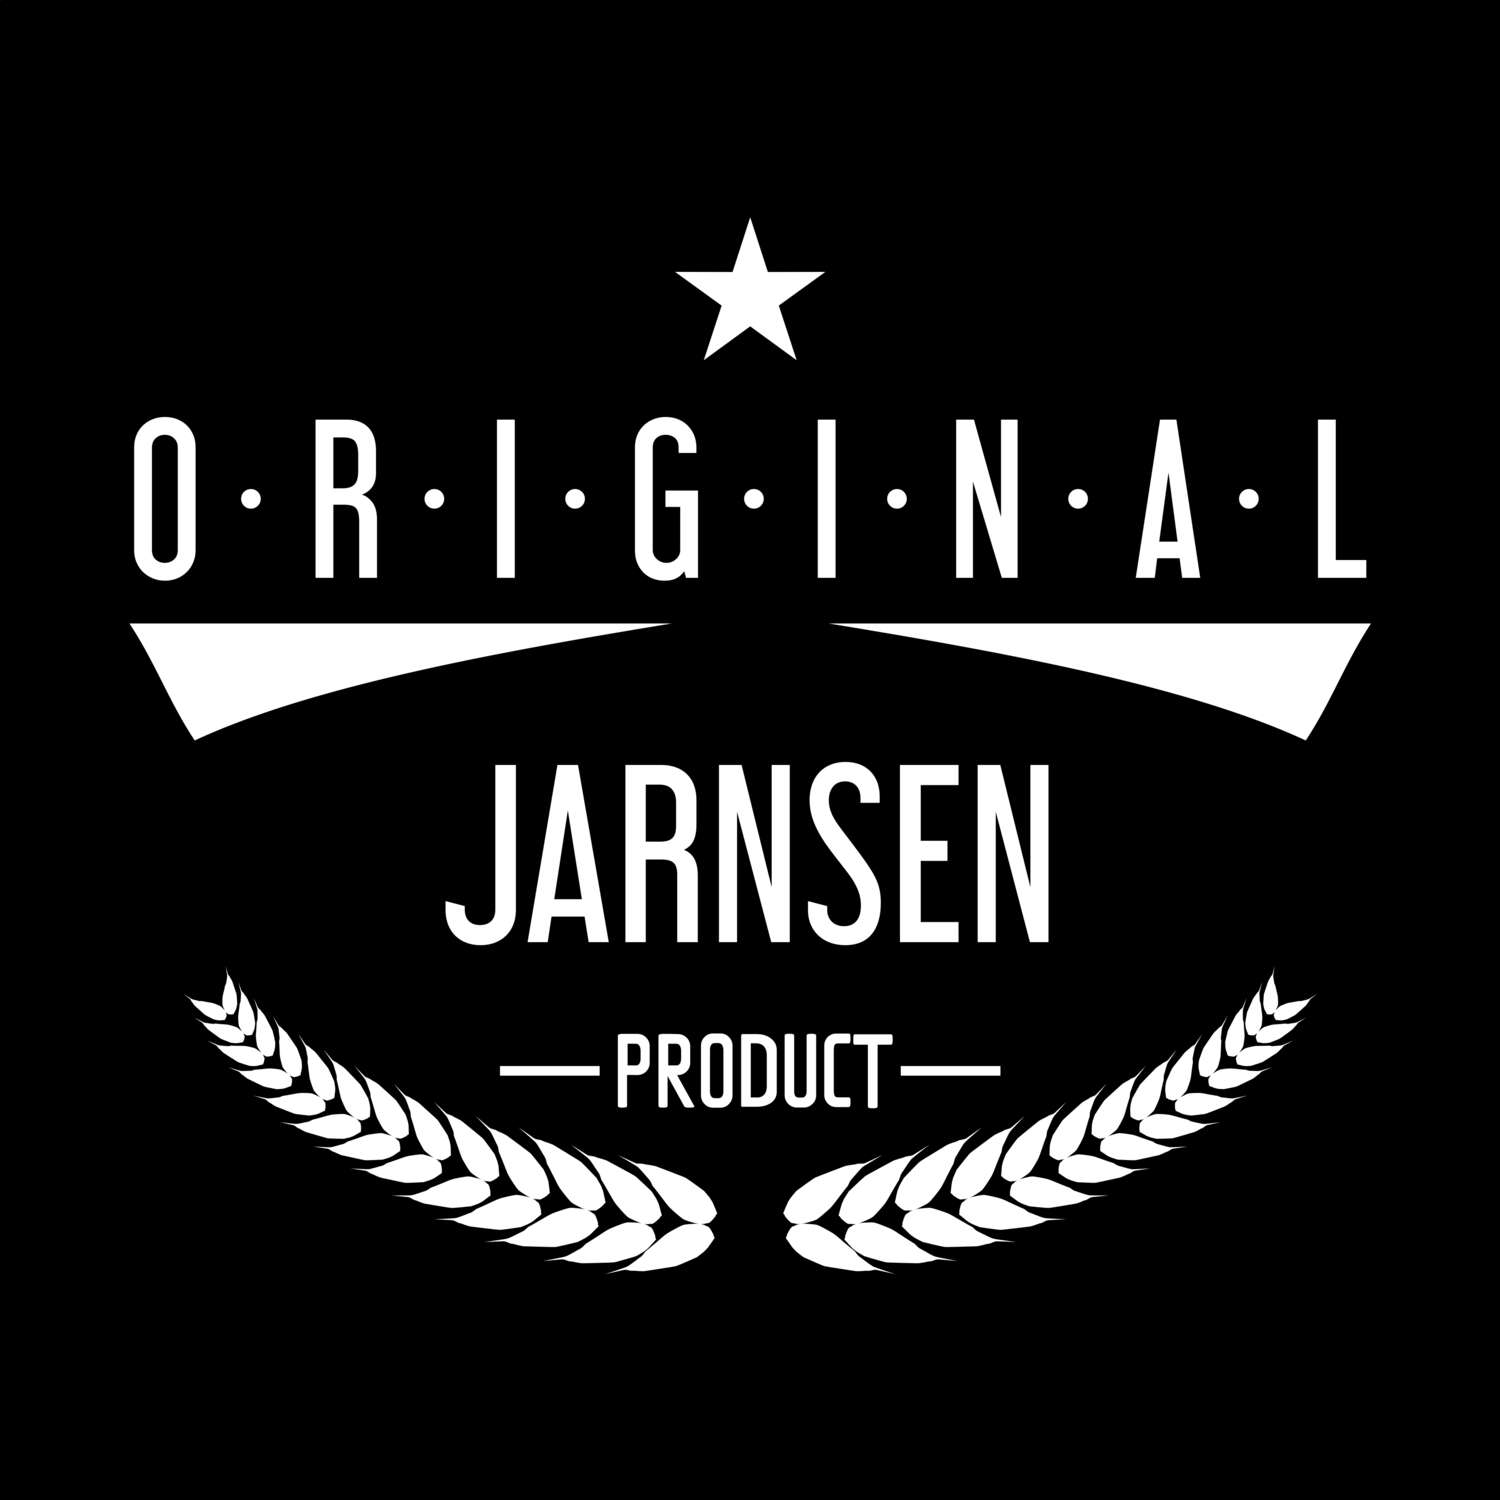 Jarnsen T-Shirt »Original Product«